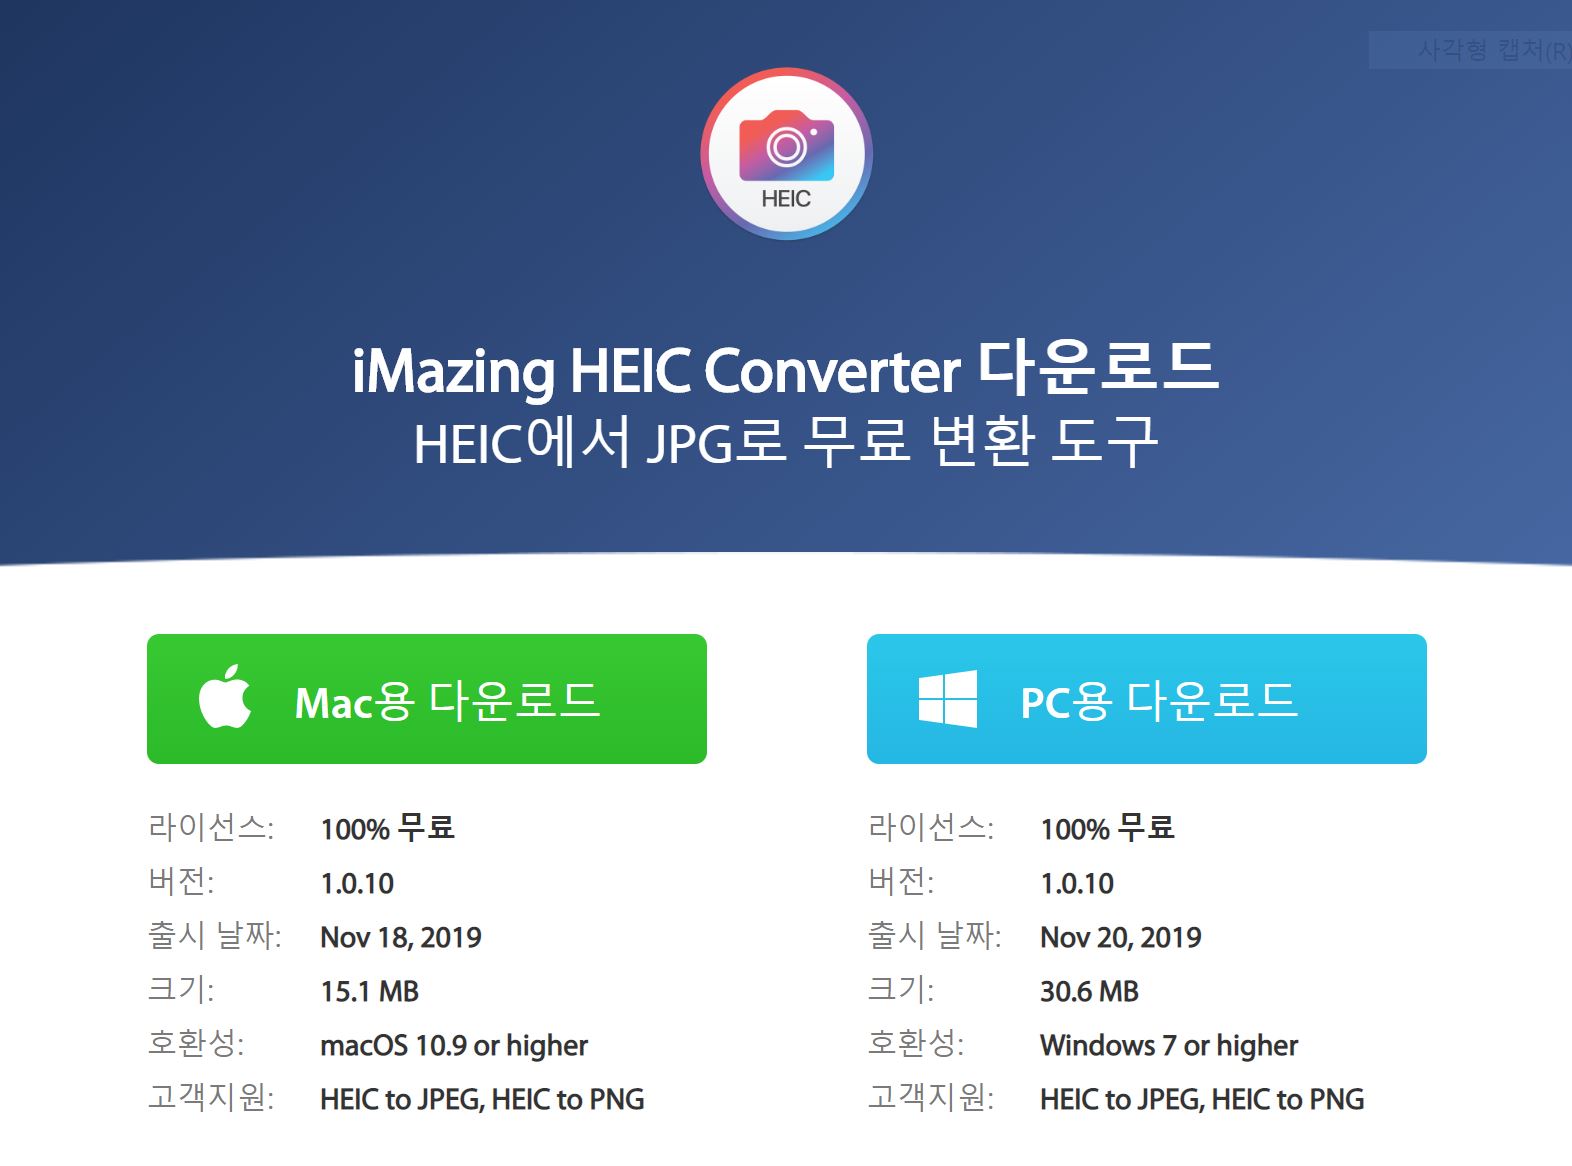 imazing heic converter version 1.0.5